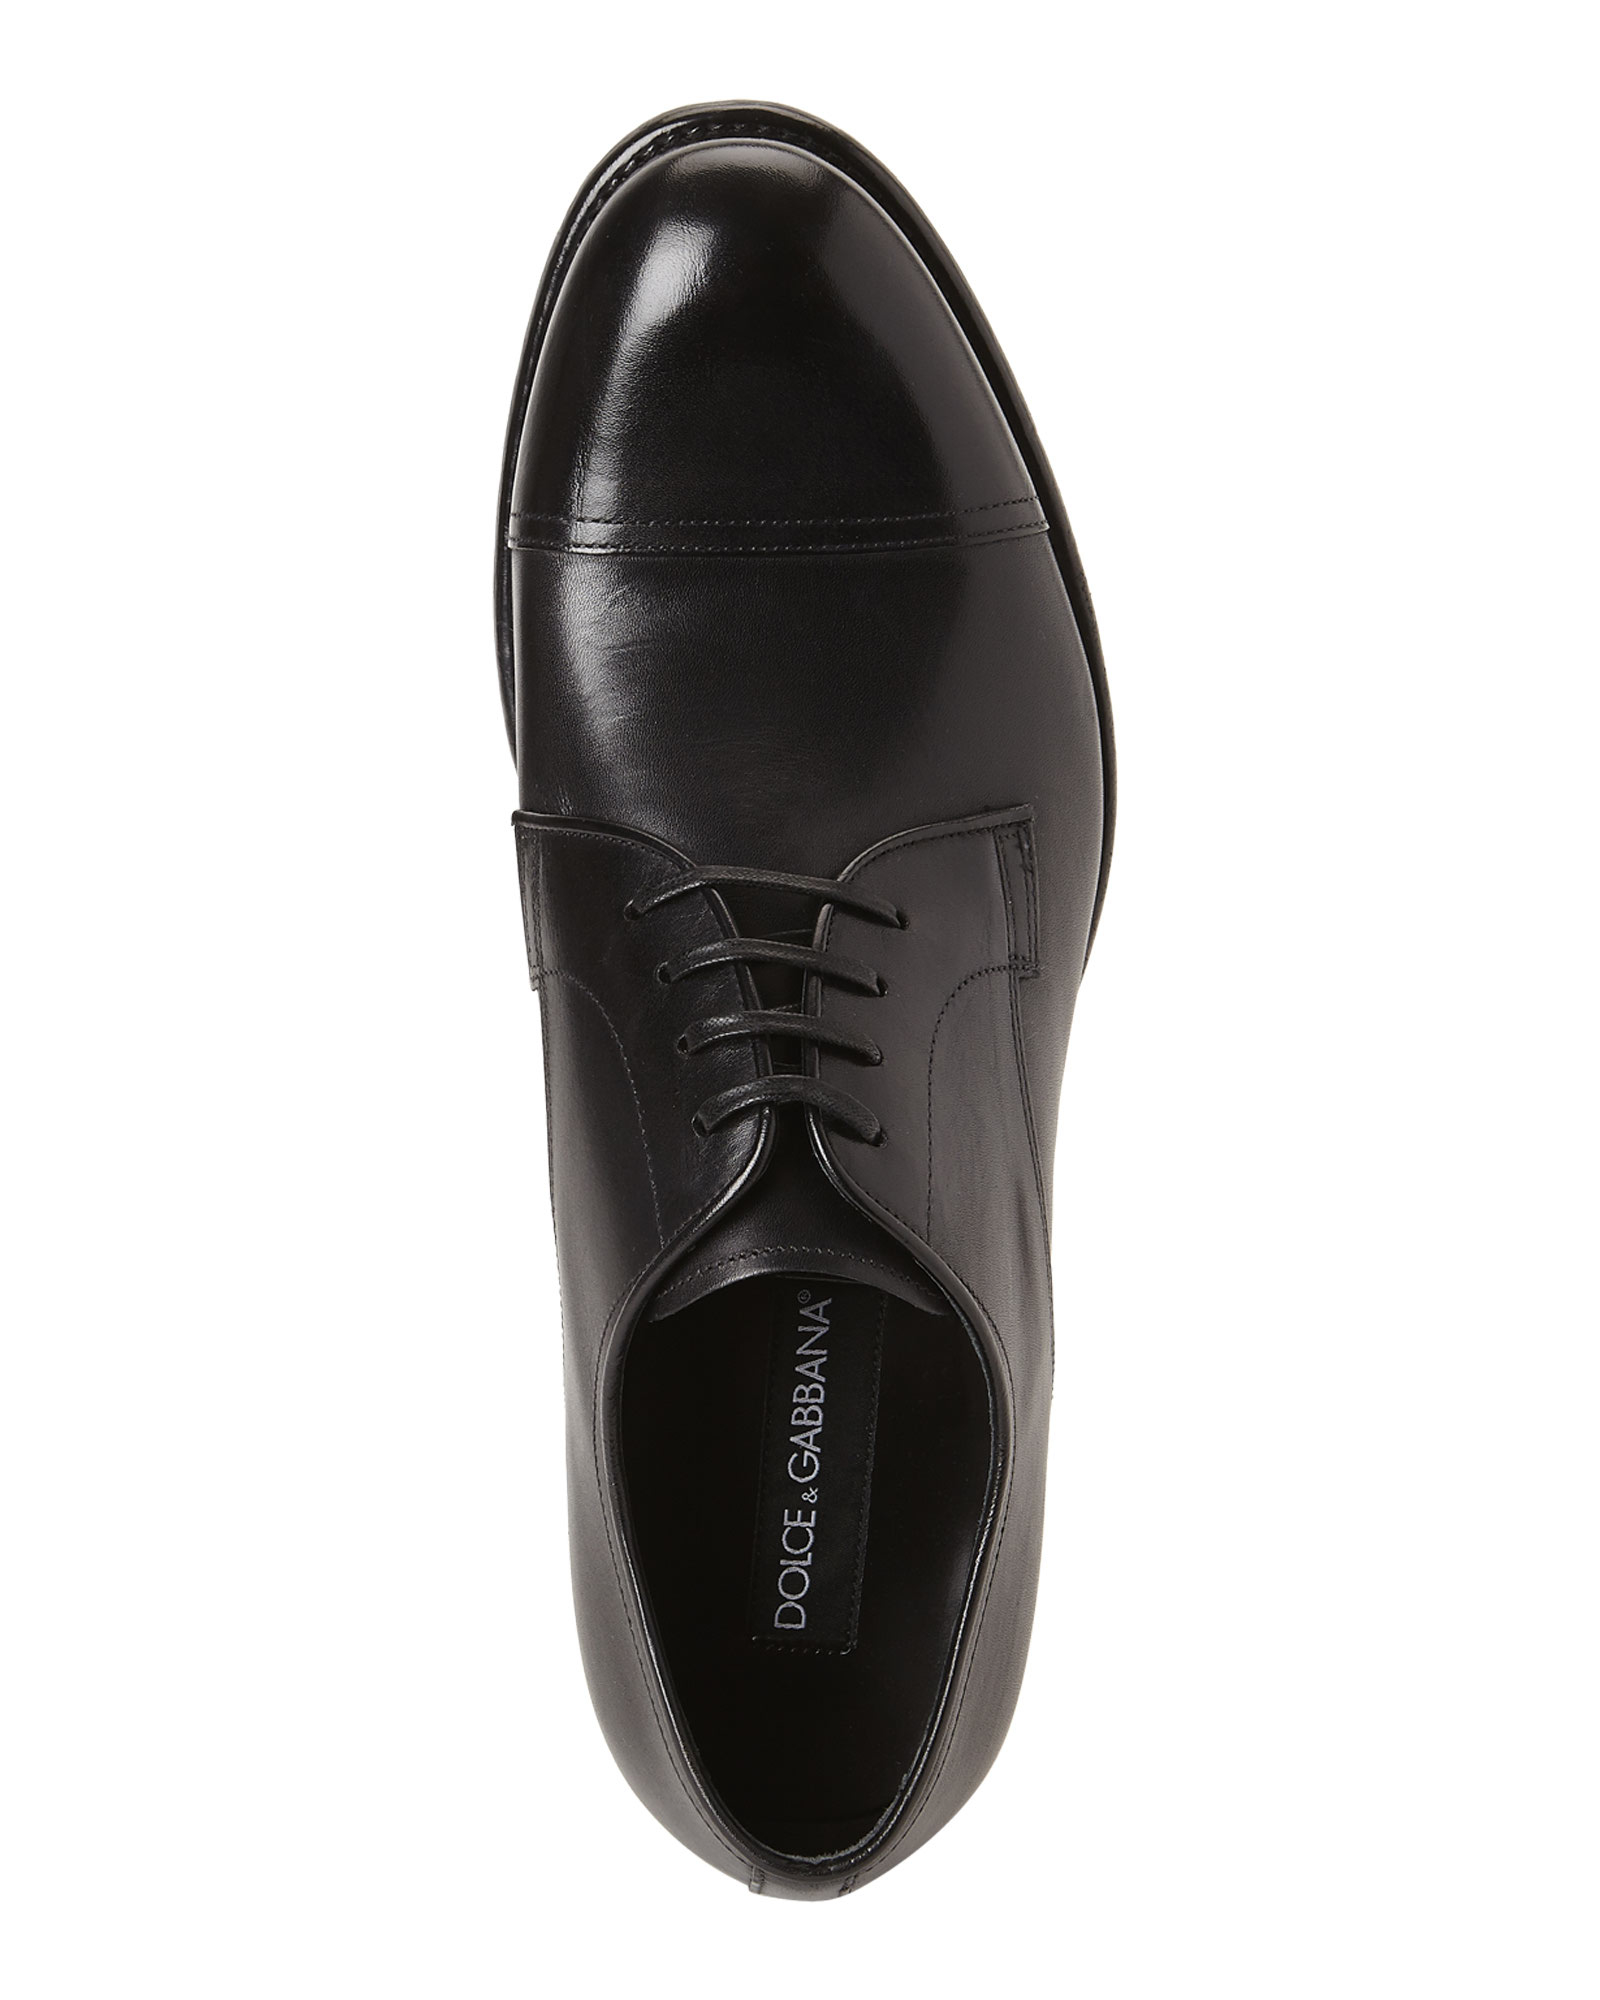 Lyst - Dolce & Gabbana Black Cap-Toe Derby Shoes in Black for Men